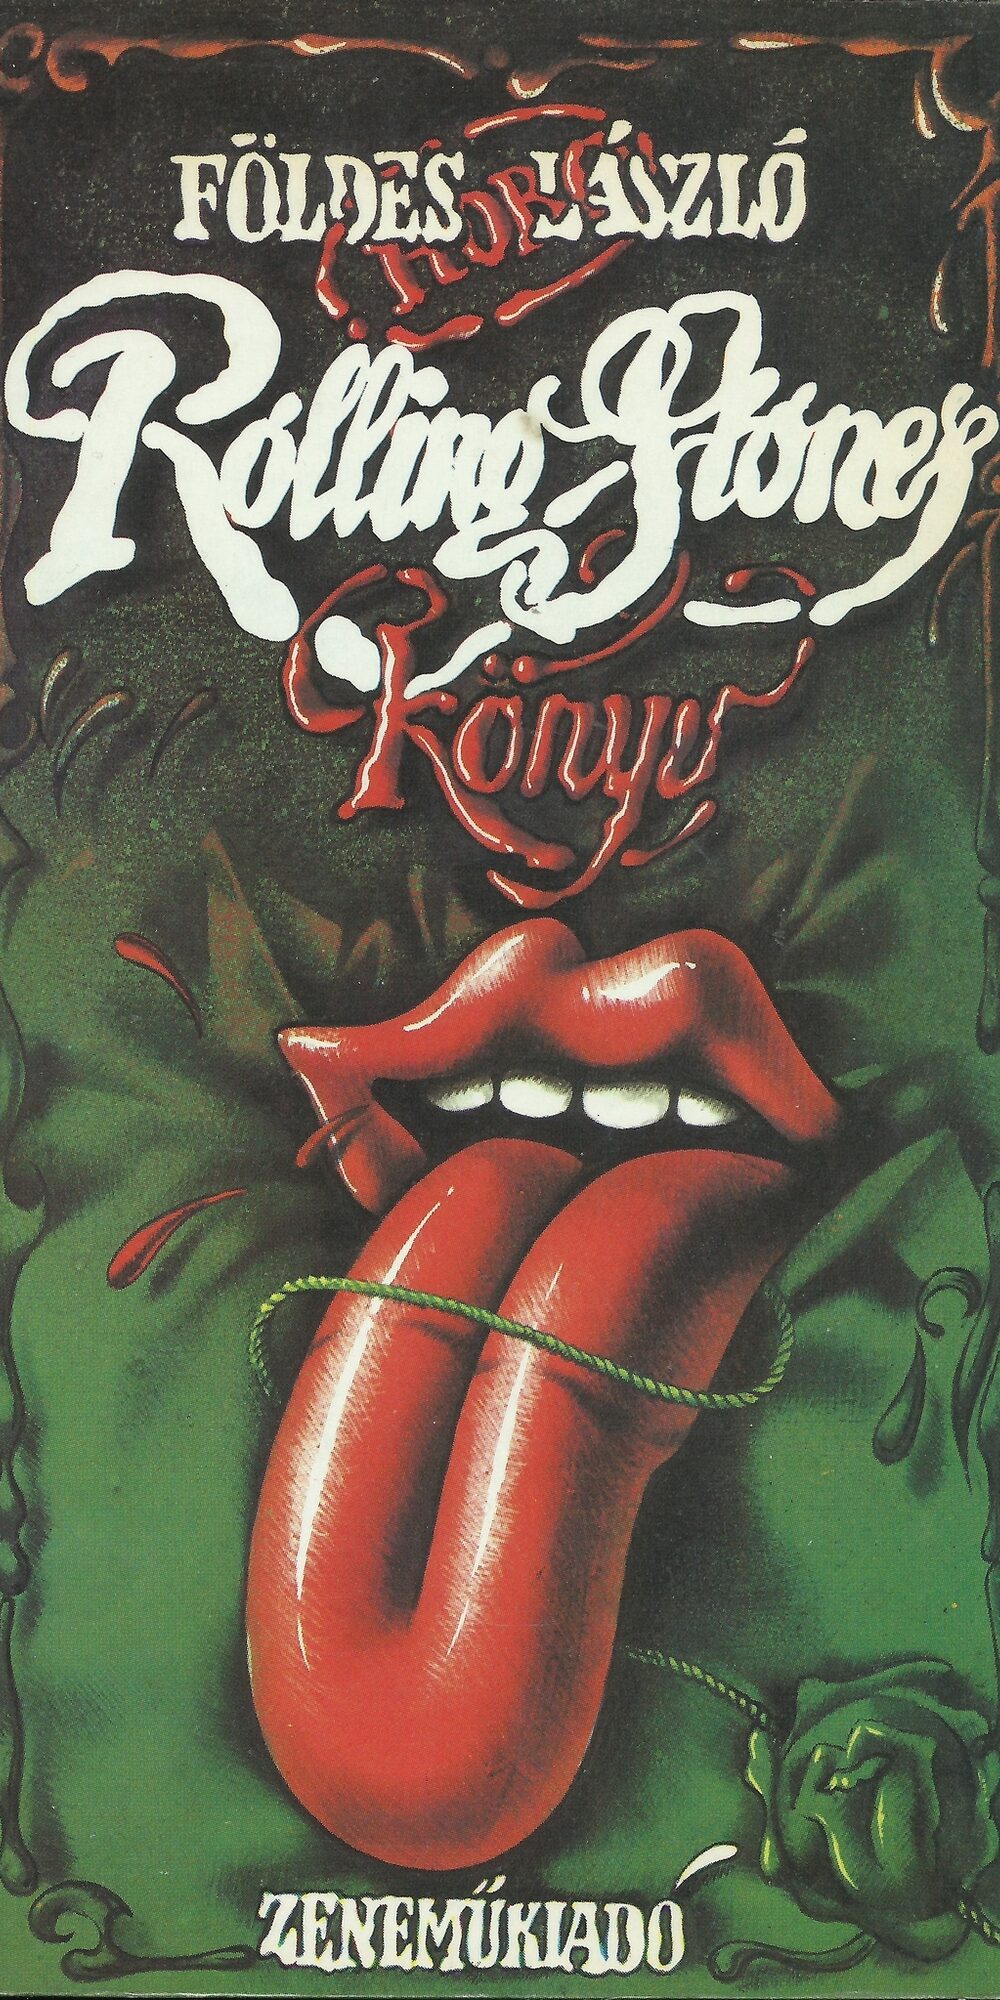 01 1982 - Rolling Stones könyv